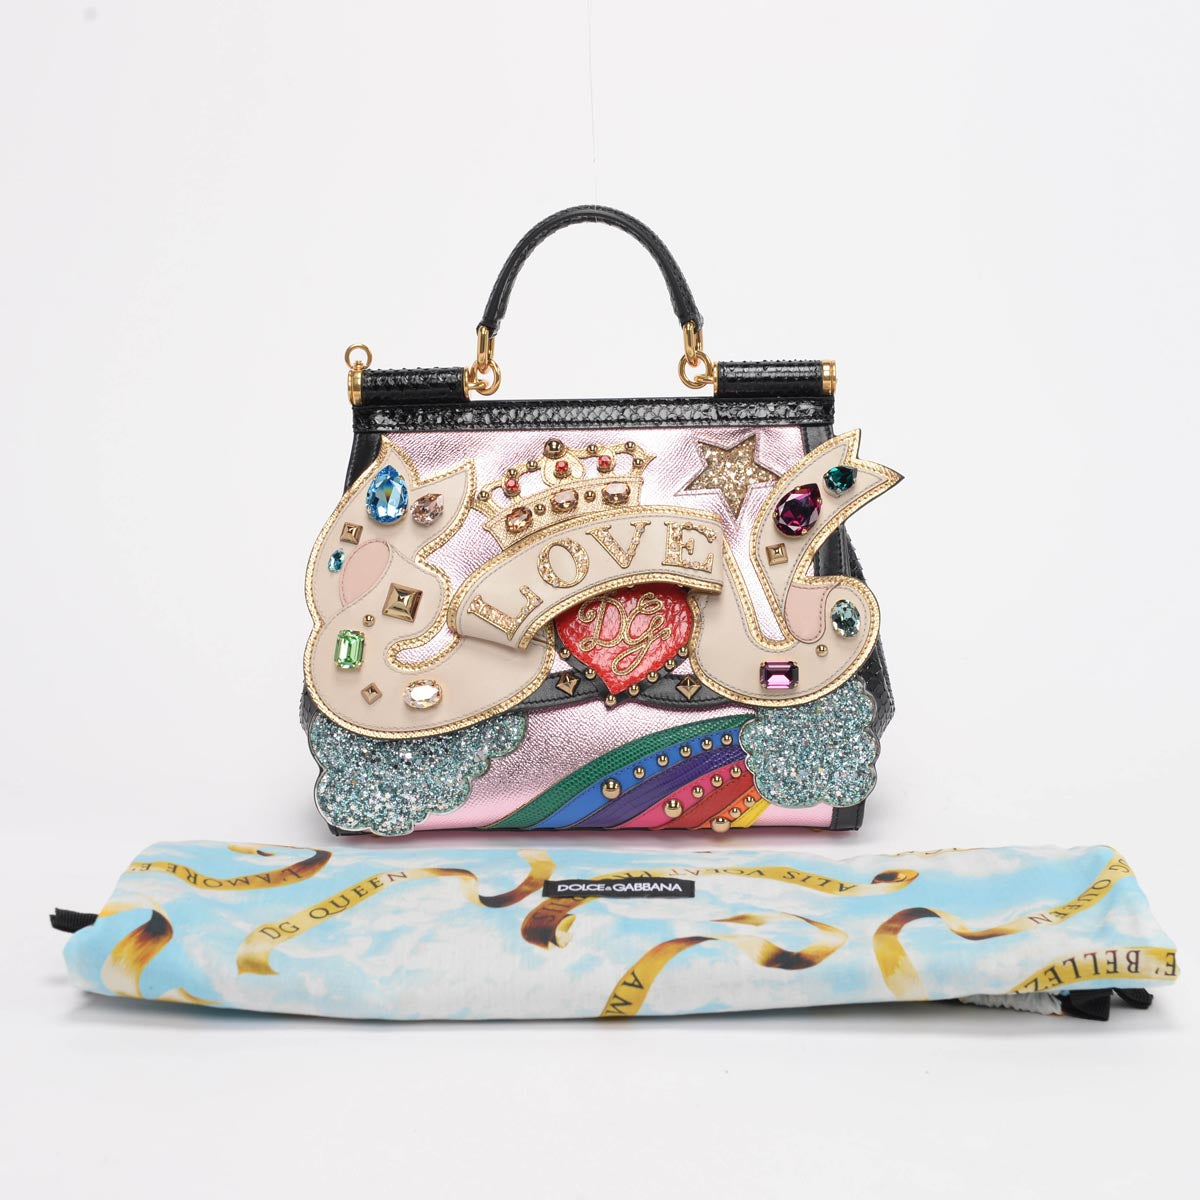 Re-sell Your Dolce & Gabbana Handbags Online | Rebag